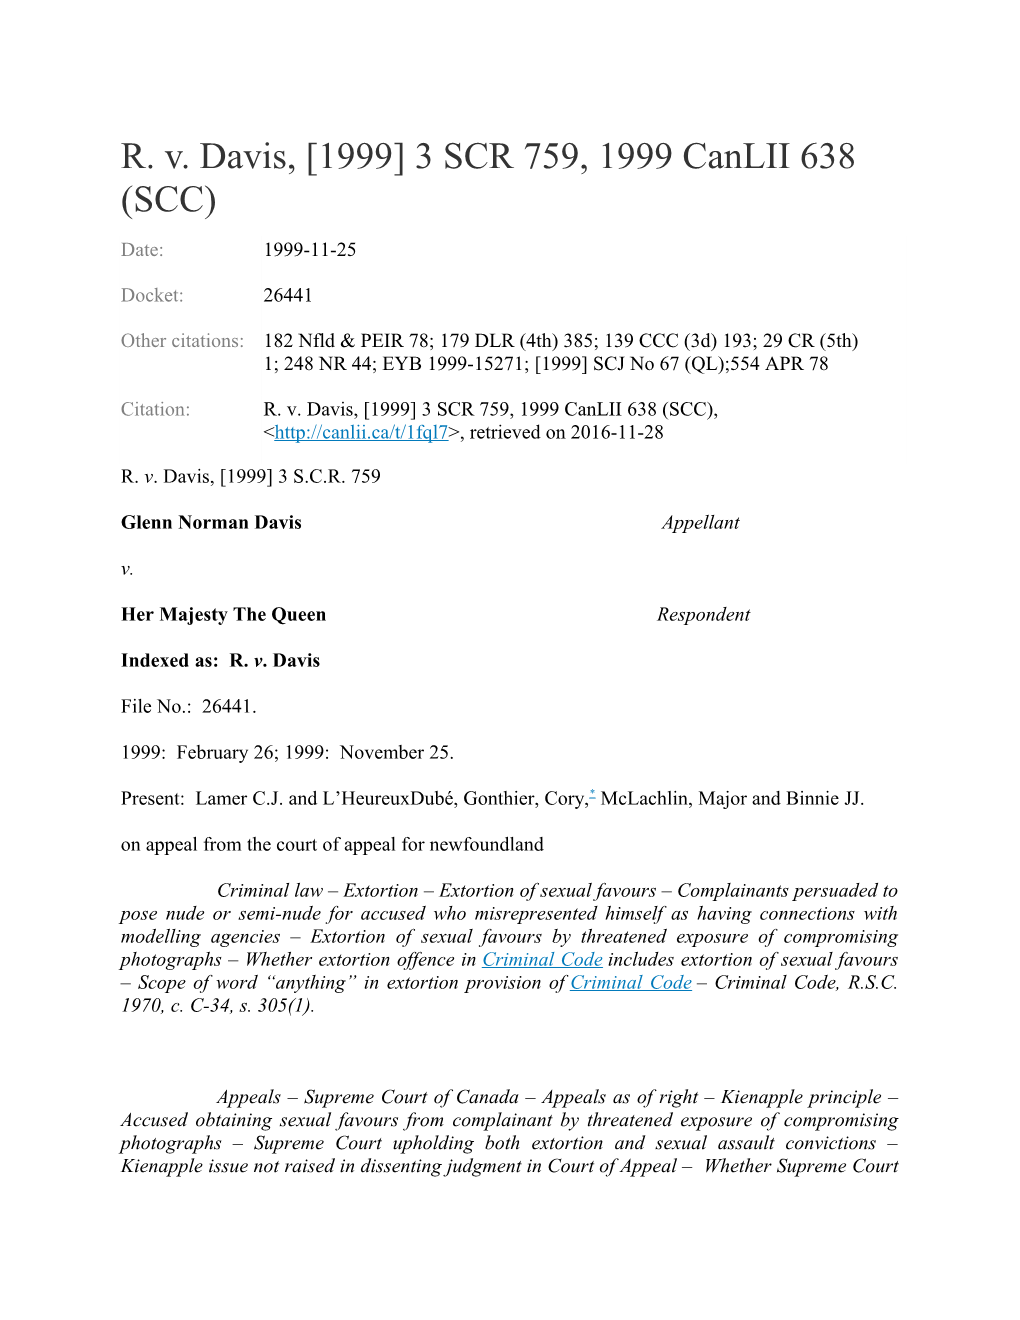 R. V. Davis, 1999 3 SCR 759, 1999 Canlii 638 (SCC)